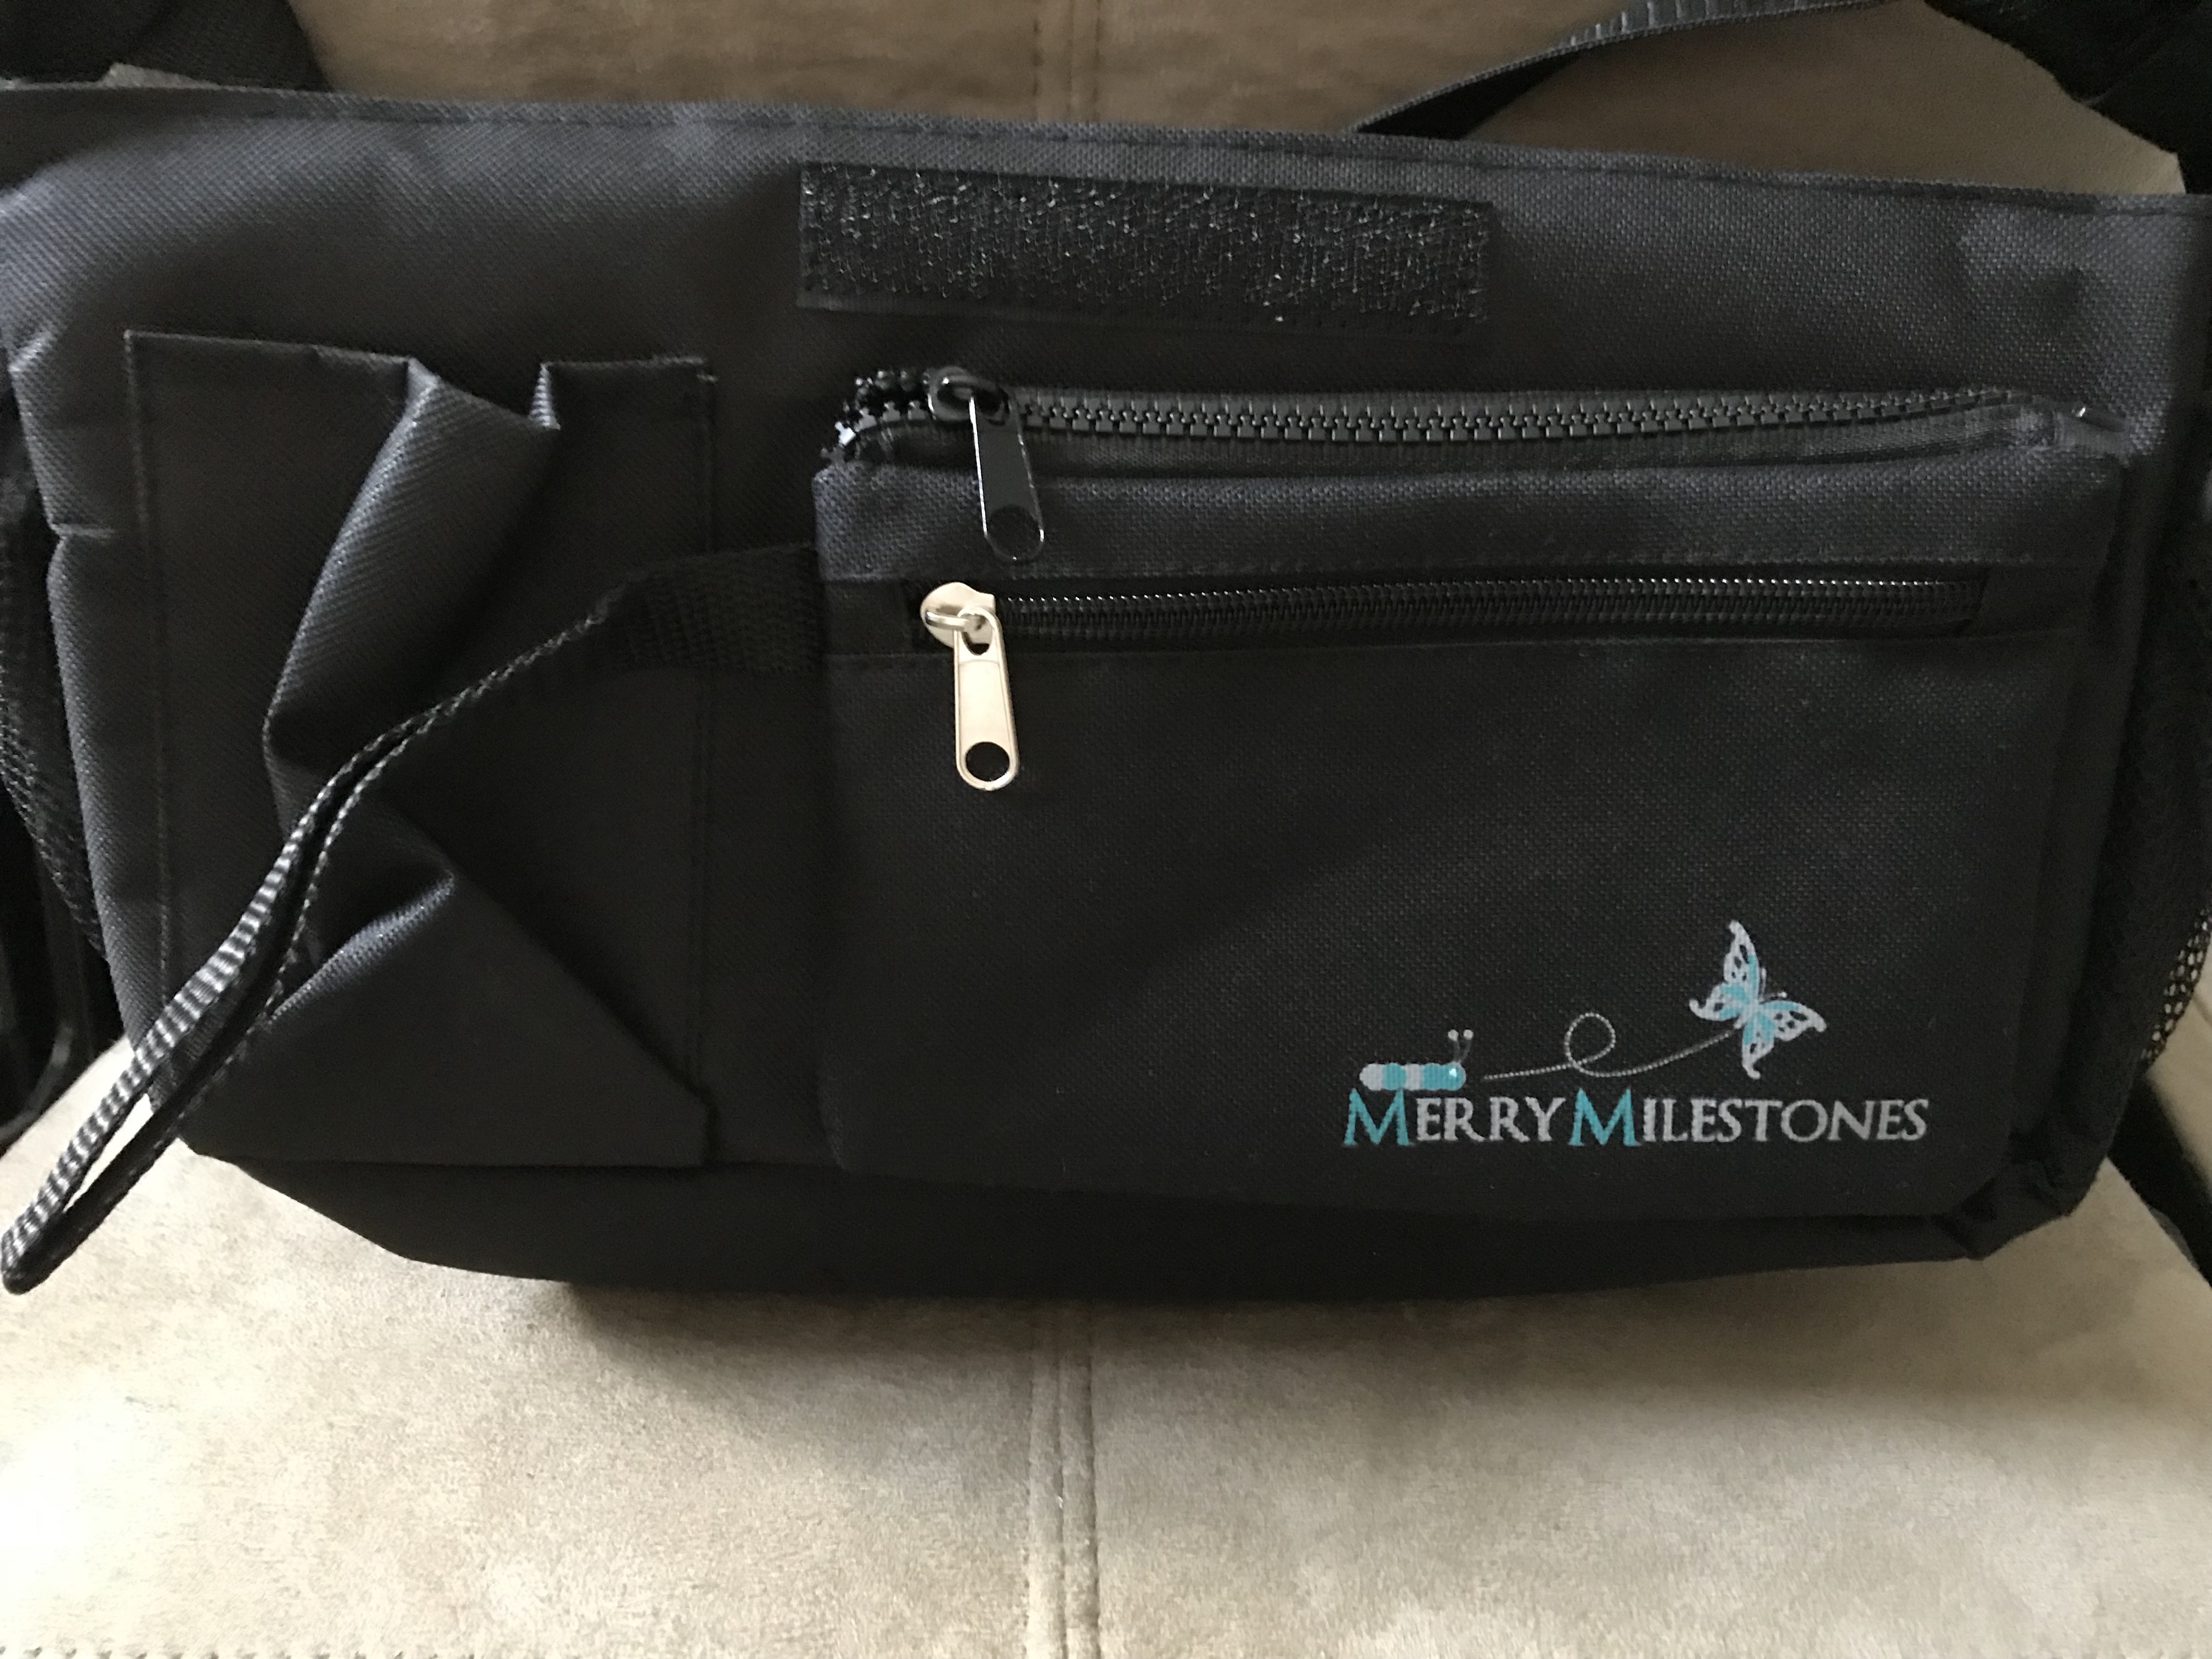 Merry Milestone Stroller Bag